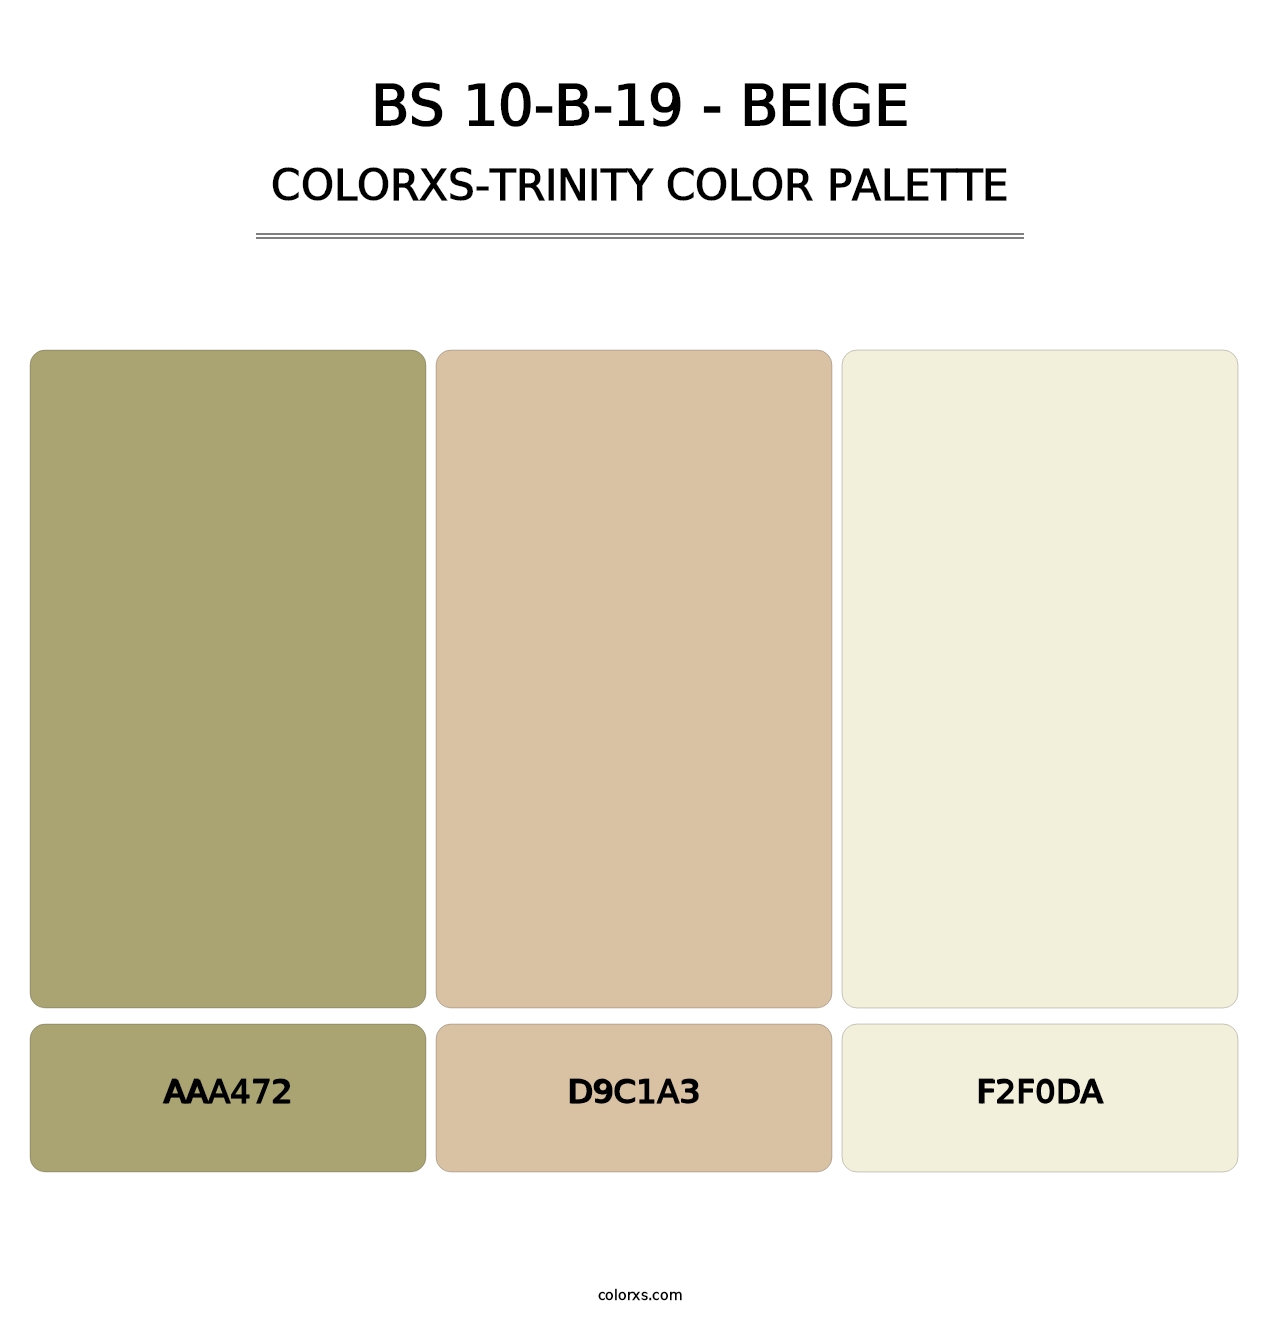 BS 10-B-19 - Beige - Colorxs Trinity Palette